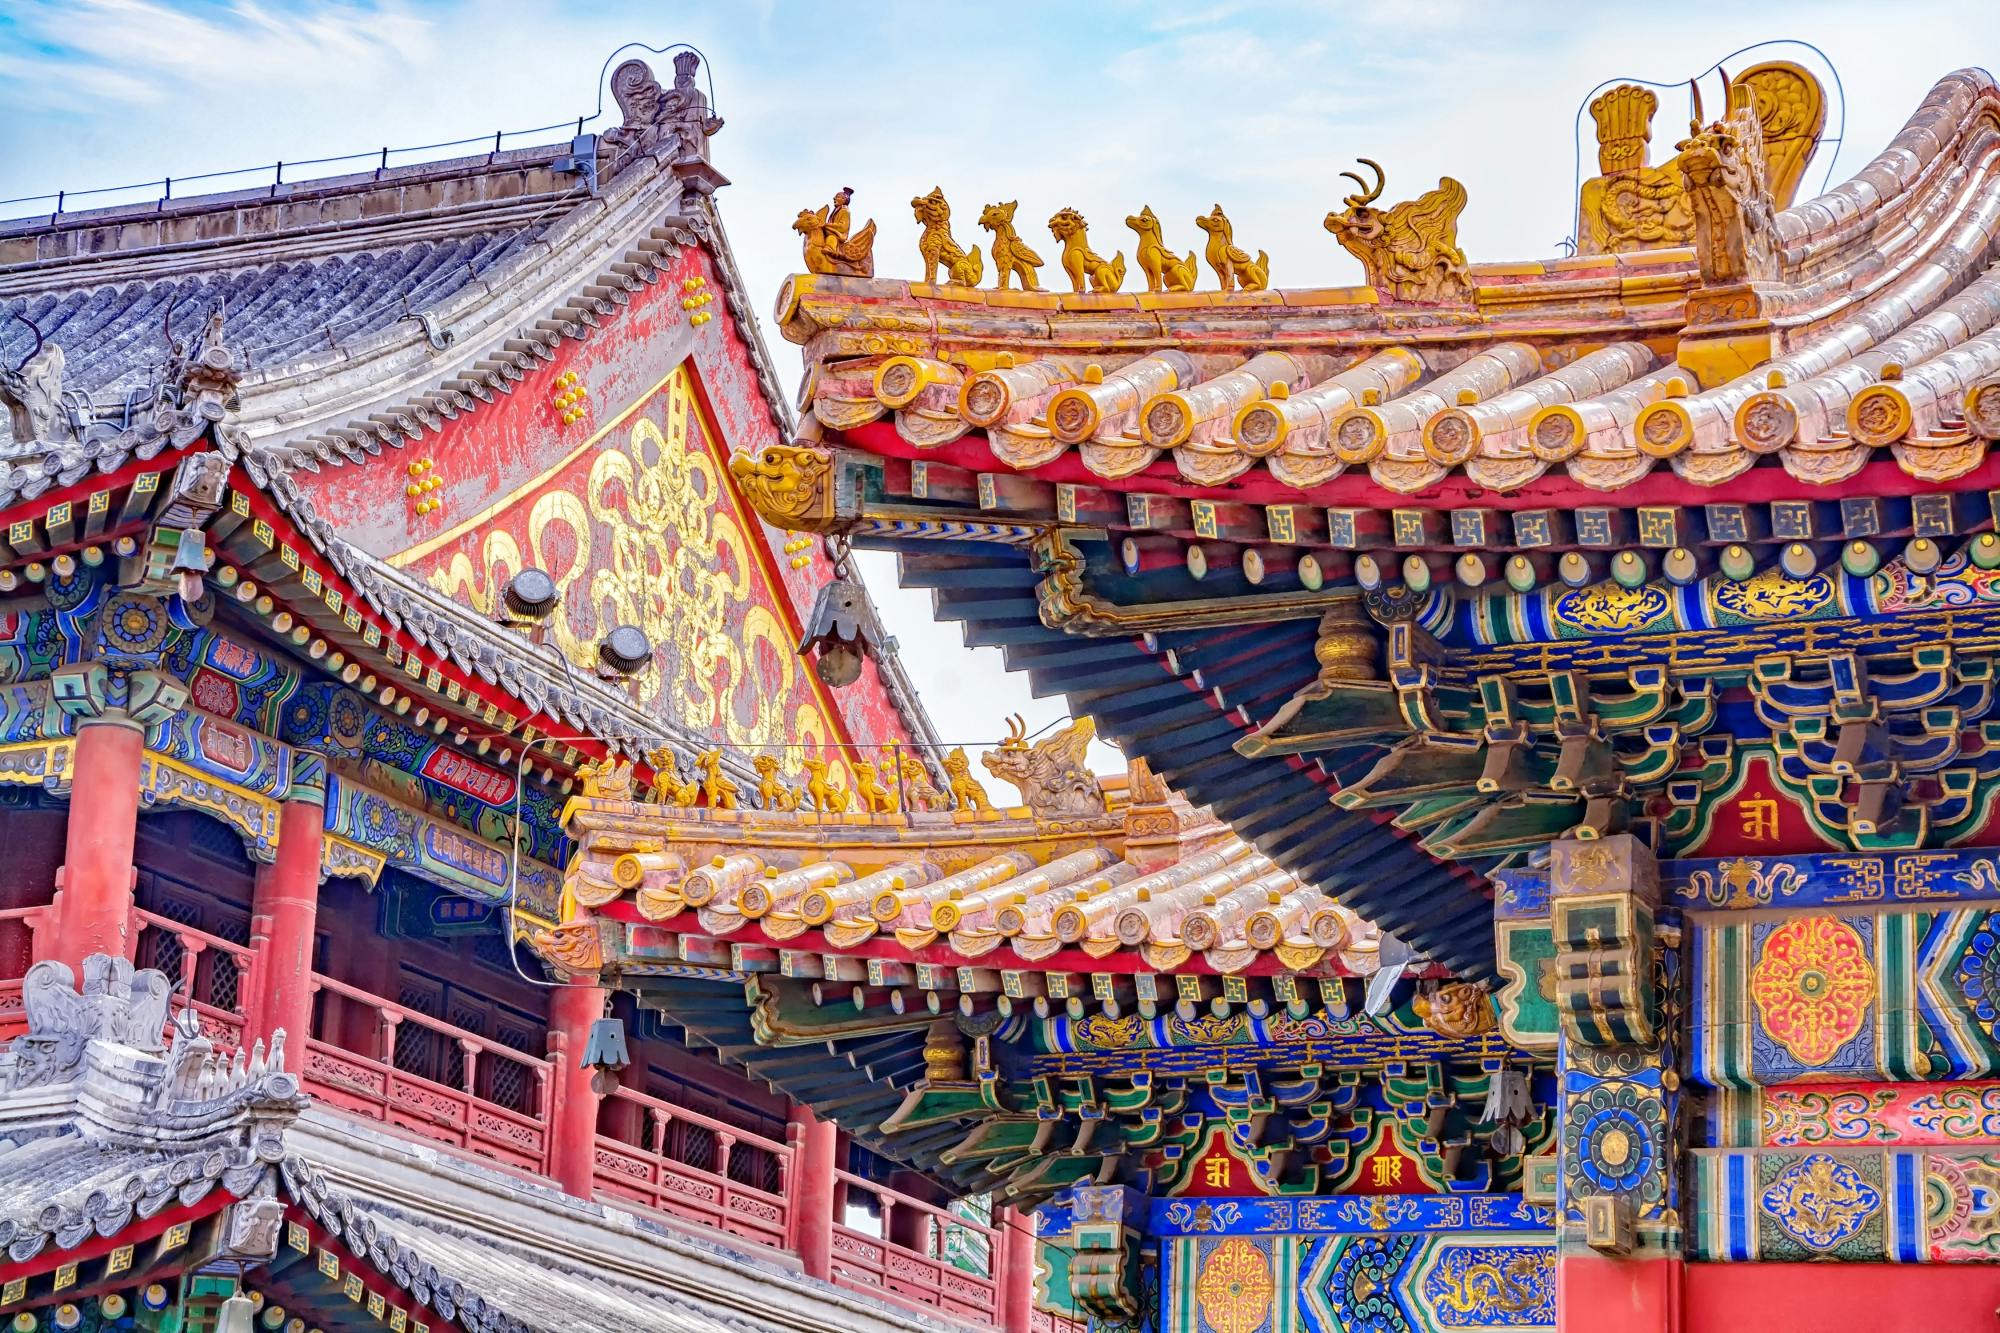 Private Tour of Lama Temple, Confucius Temple and Imperial College